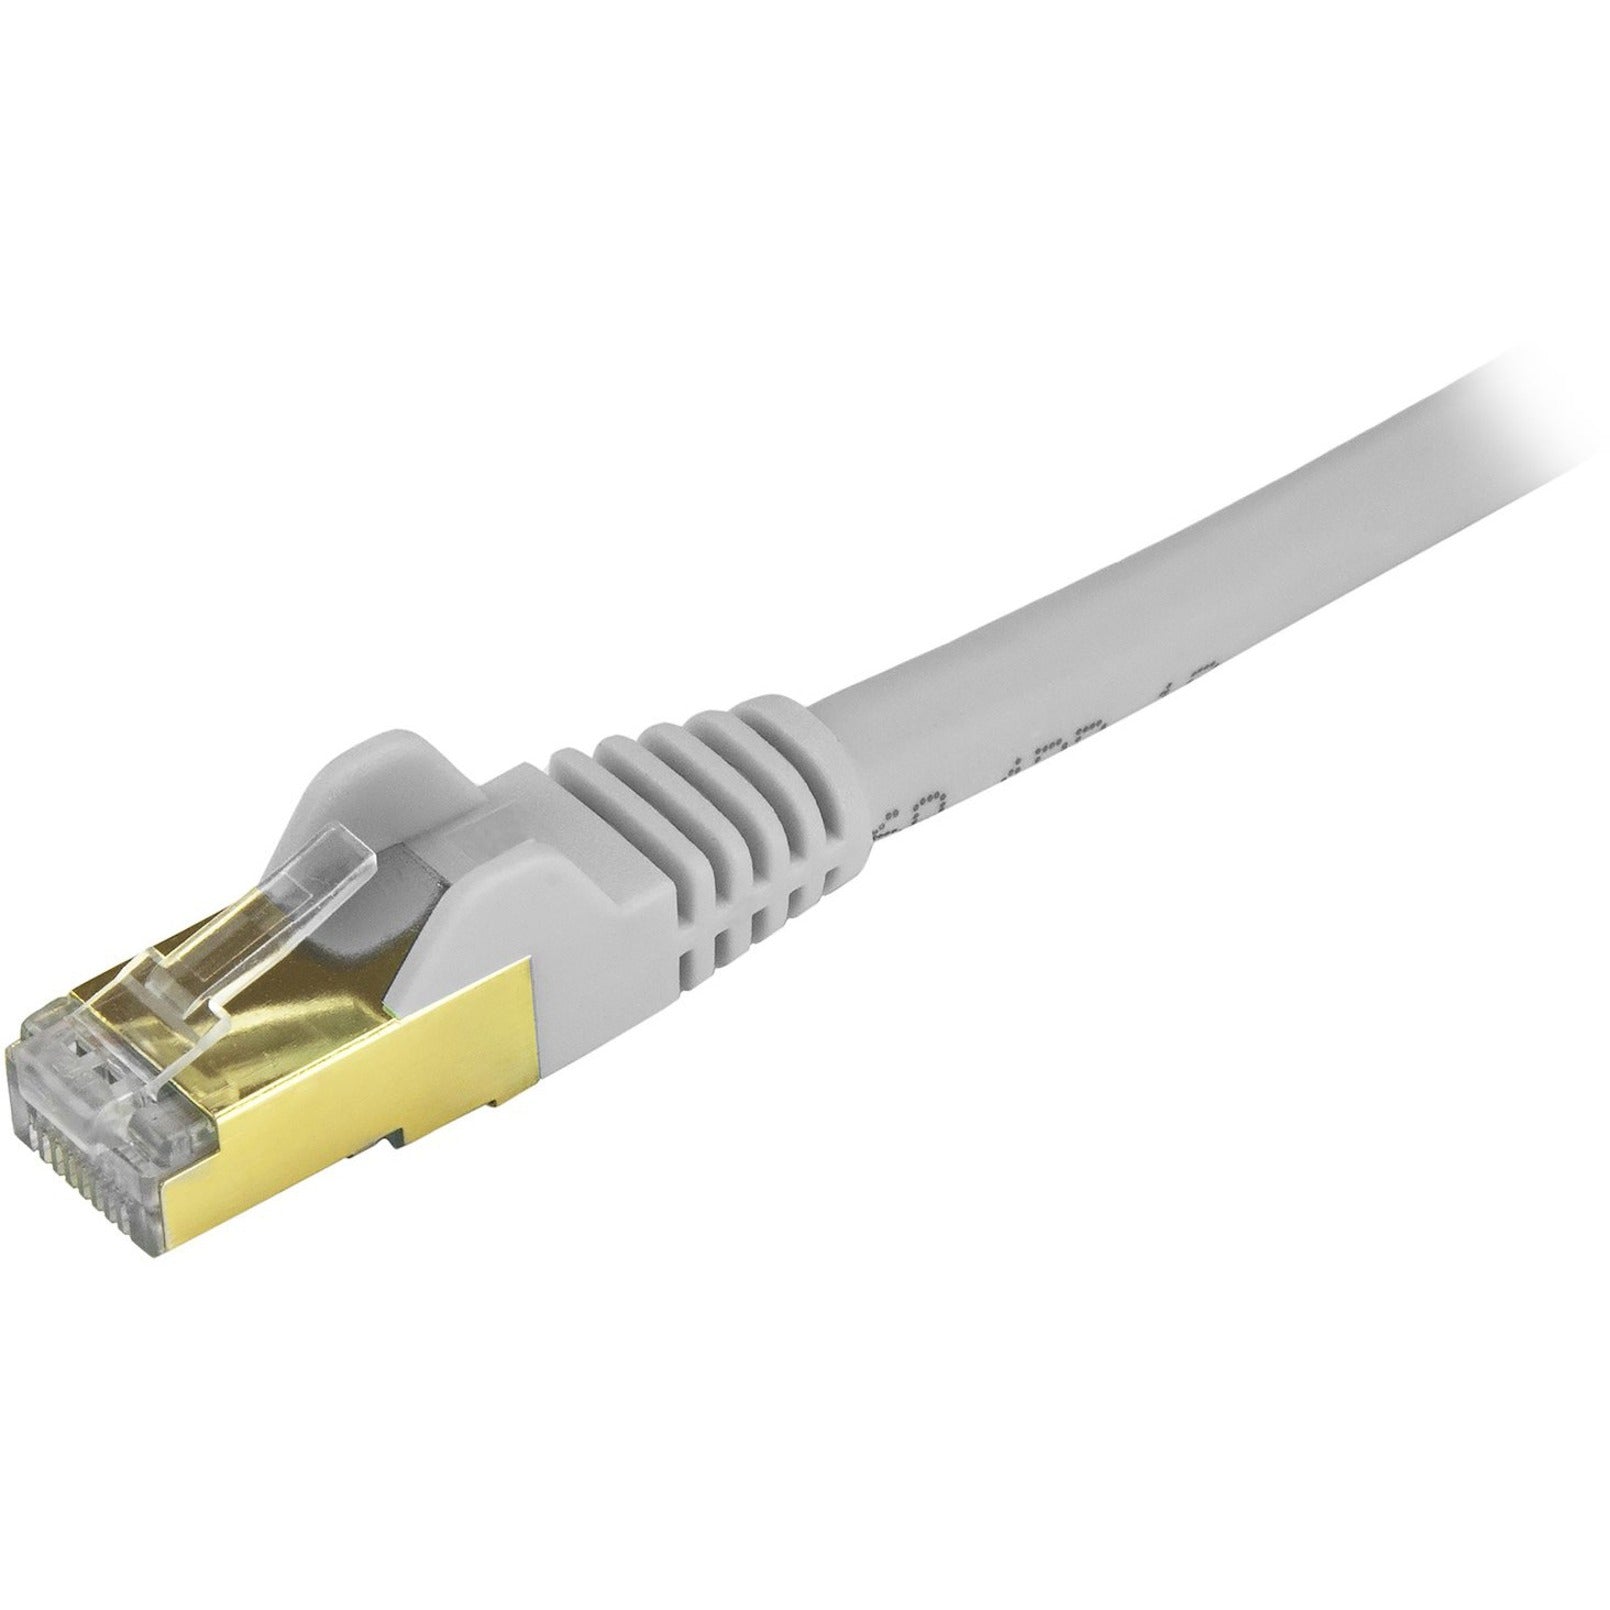 StarTech.com C6ASPAT12GR Cat6a Ethernet Patch Cable - Shielded (STP) - 12 ft., Gray, Snagless RJ45 Ethernet Cord